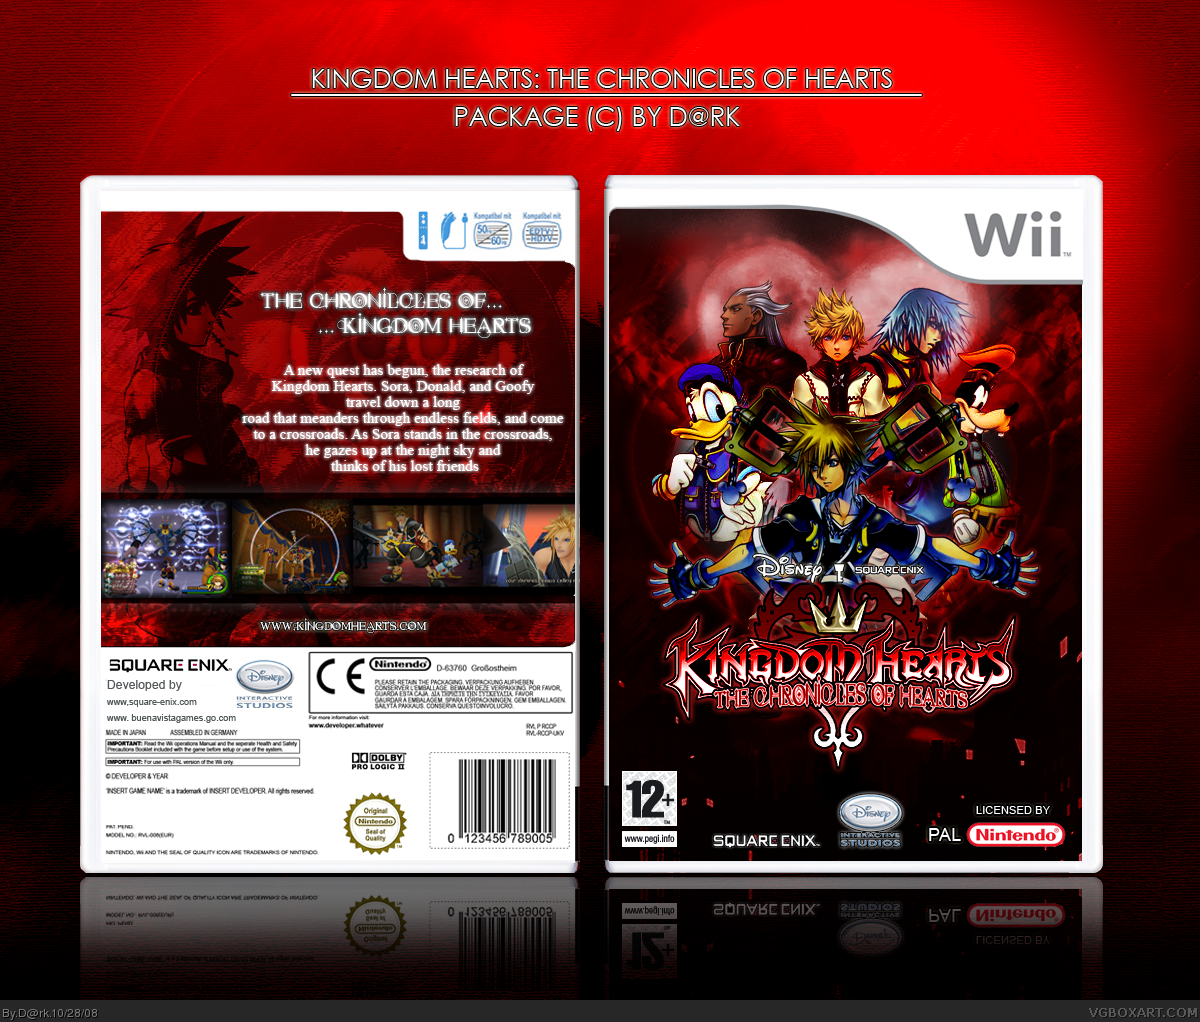 Kingdom Hearts: The Chronicles of Hearts box cover